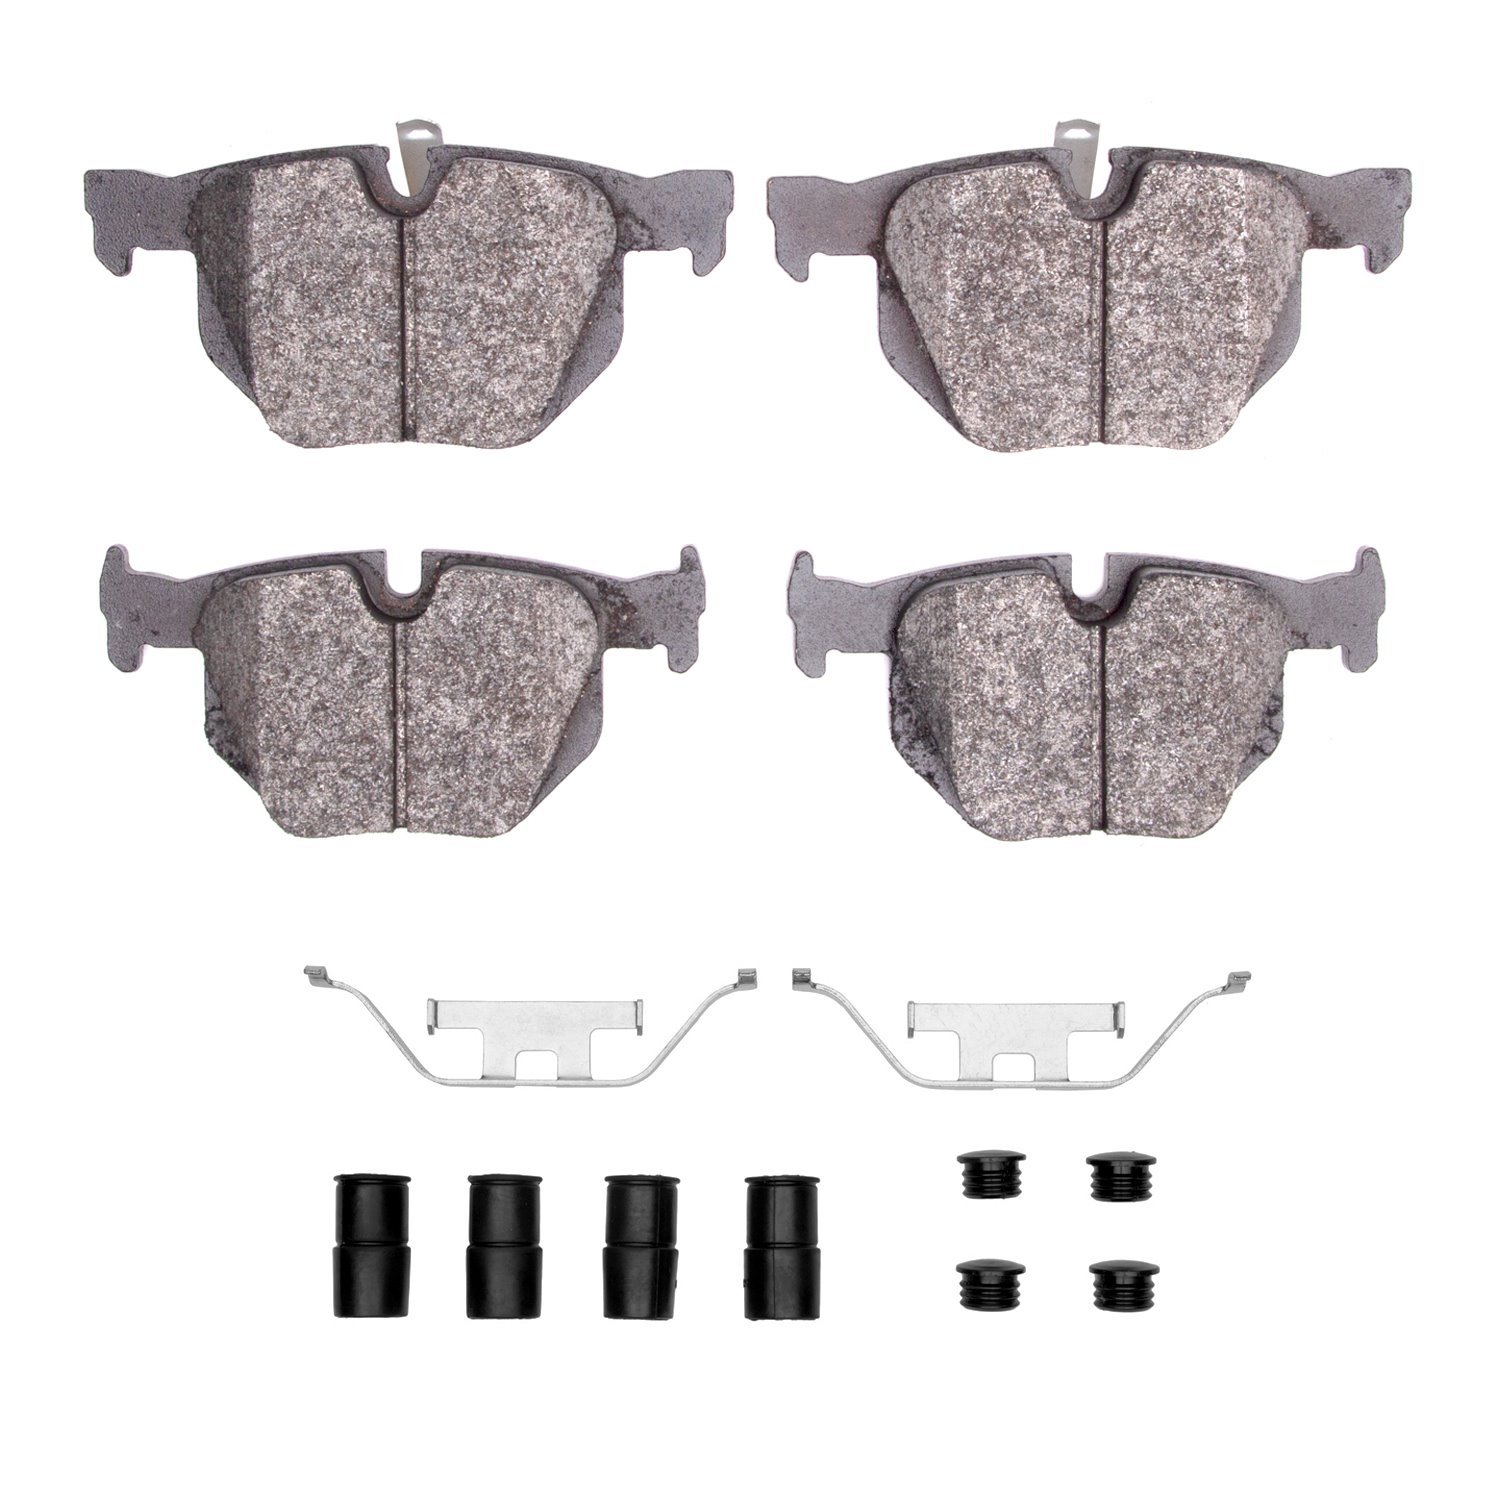 1551-1170-01 5000 Advanced Low-Metallic Brake Pads & Hardware Kit, 2006-2015 BMW, Position: Rear